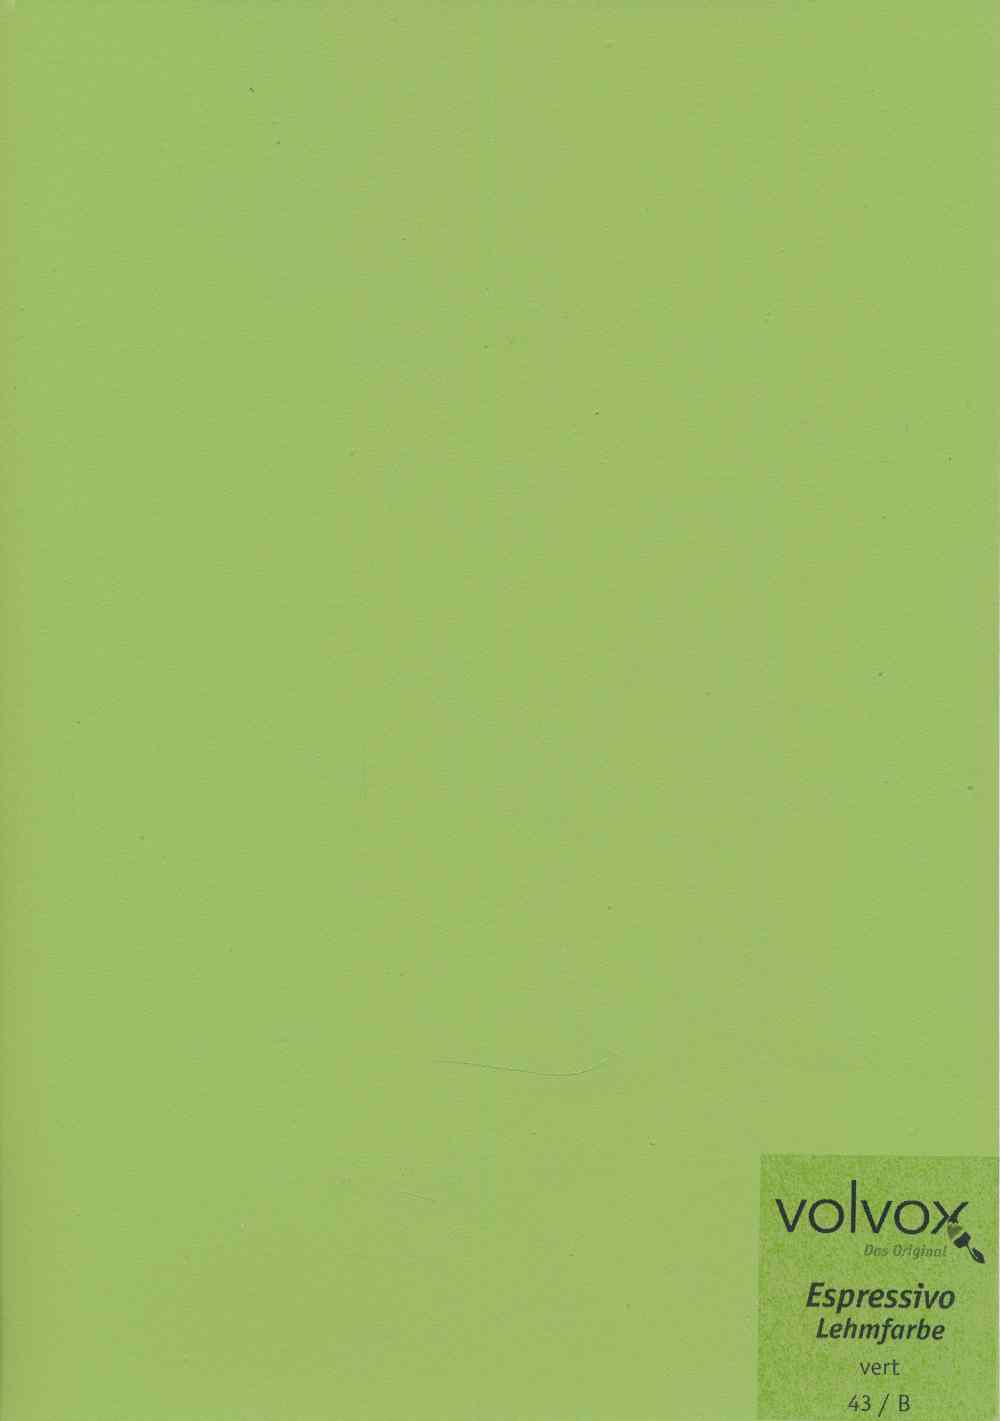 Volvox Espressivo Lehmfarbe 043 vert 